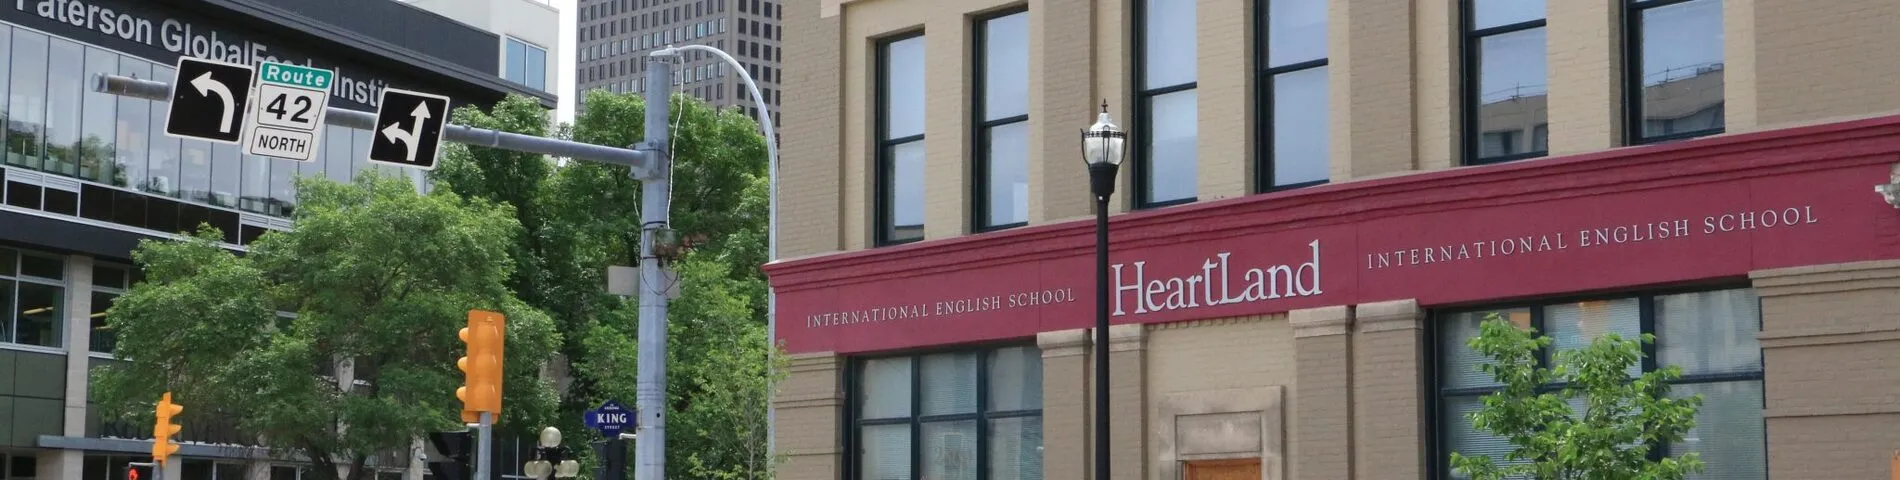 Heartland International English School afbeelding 1